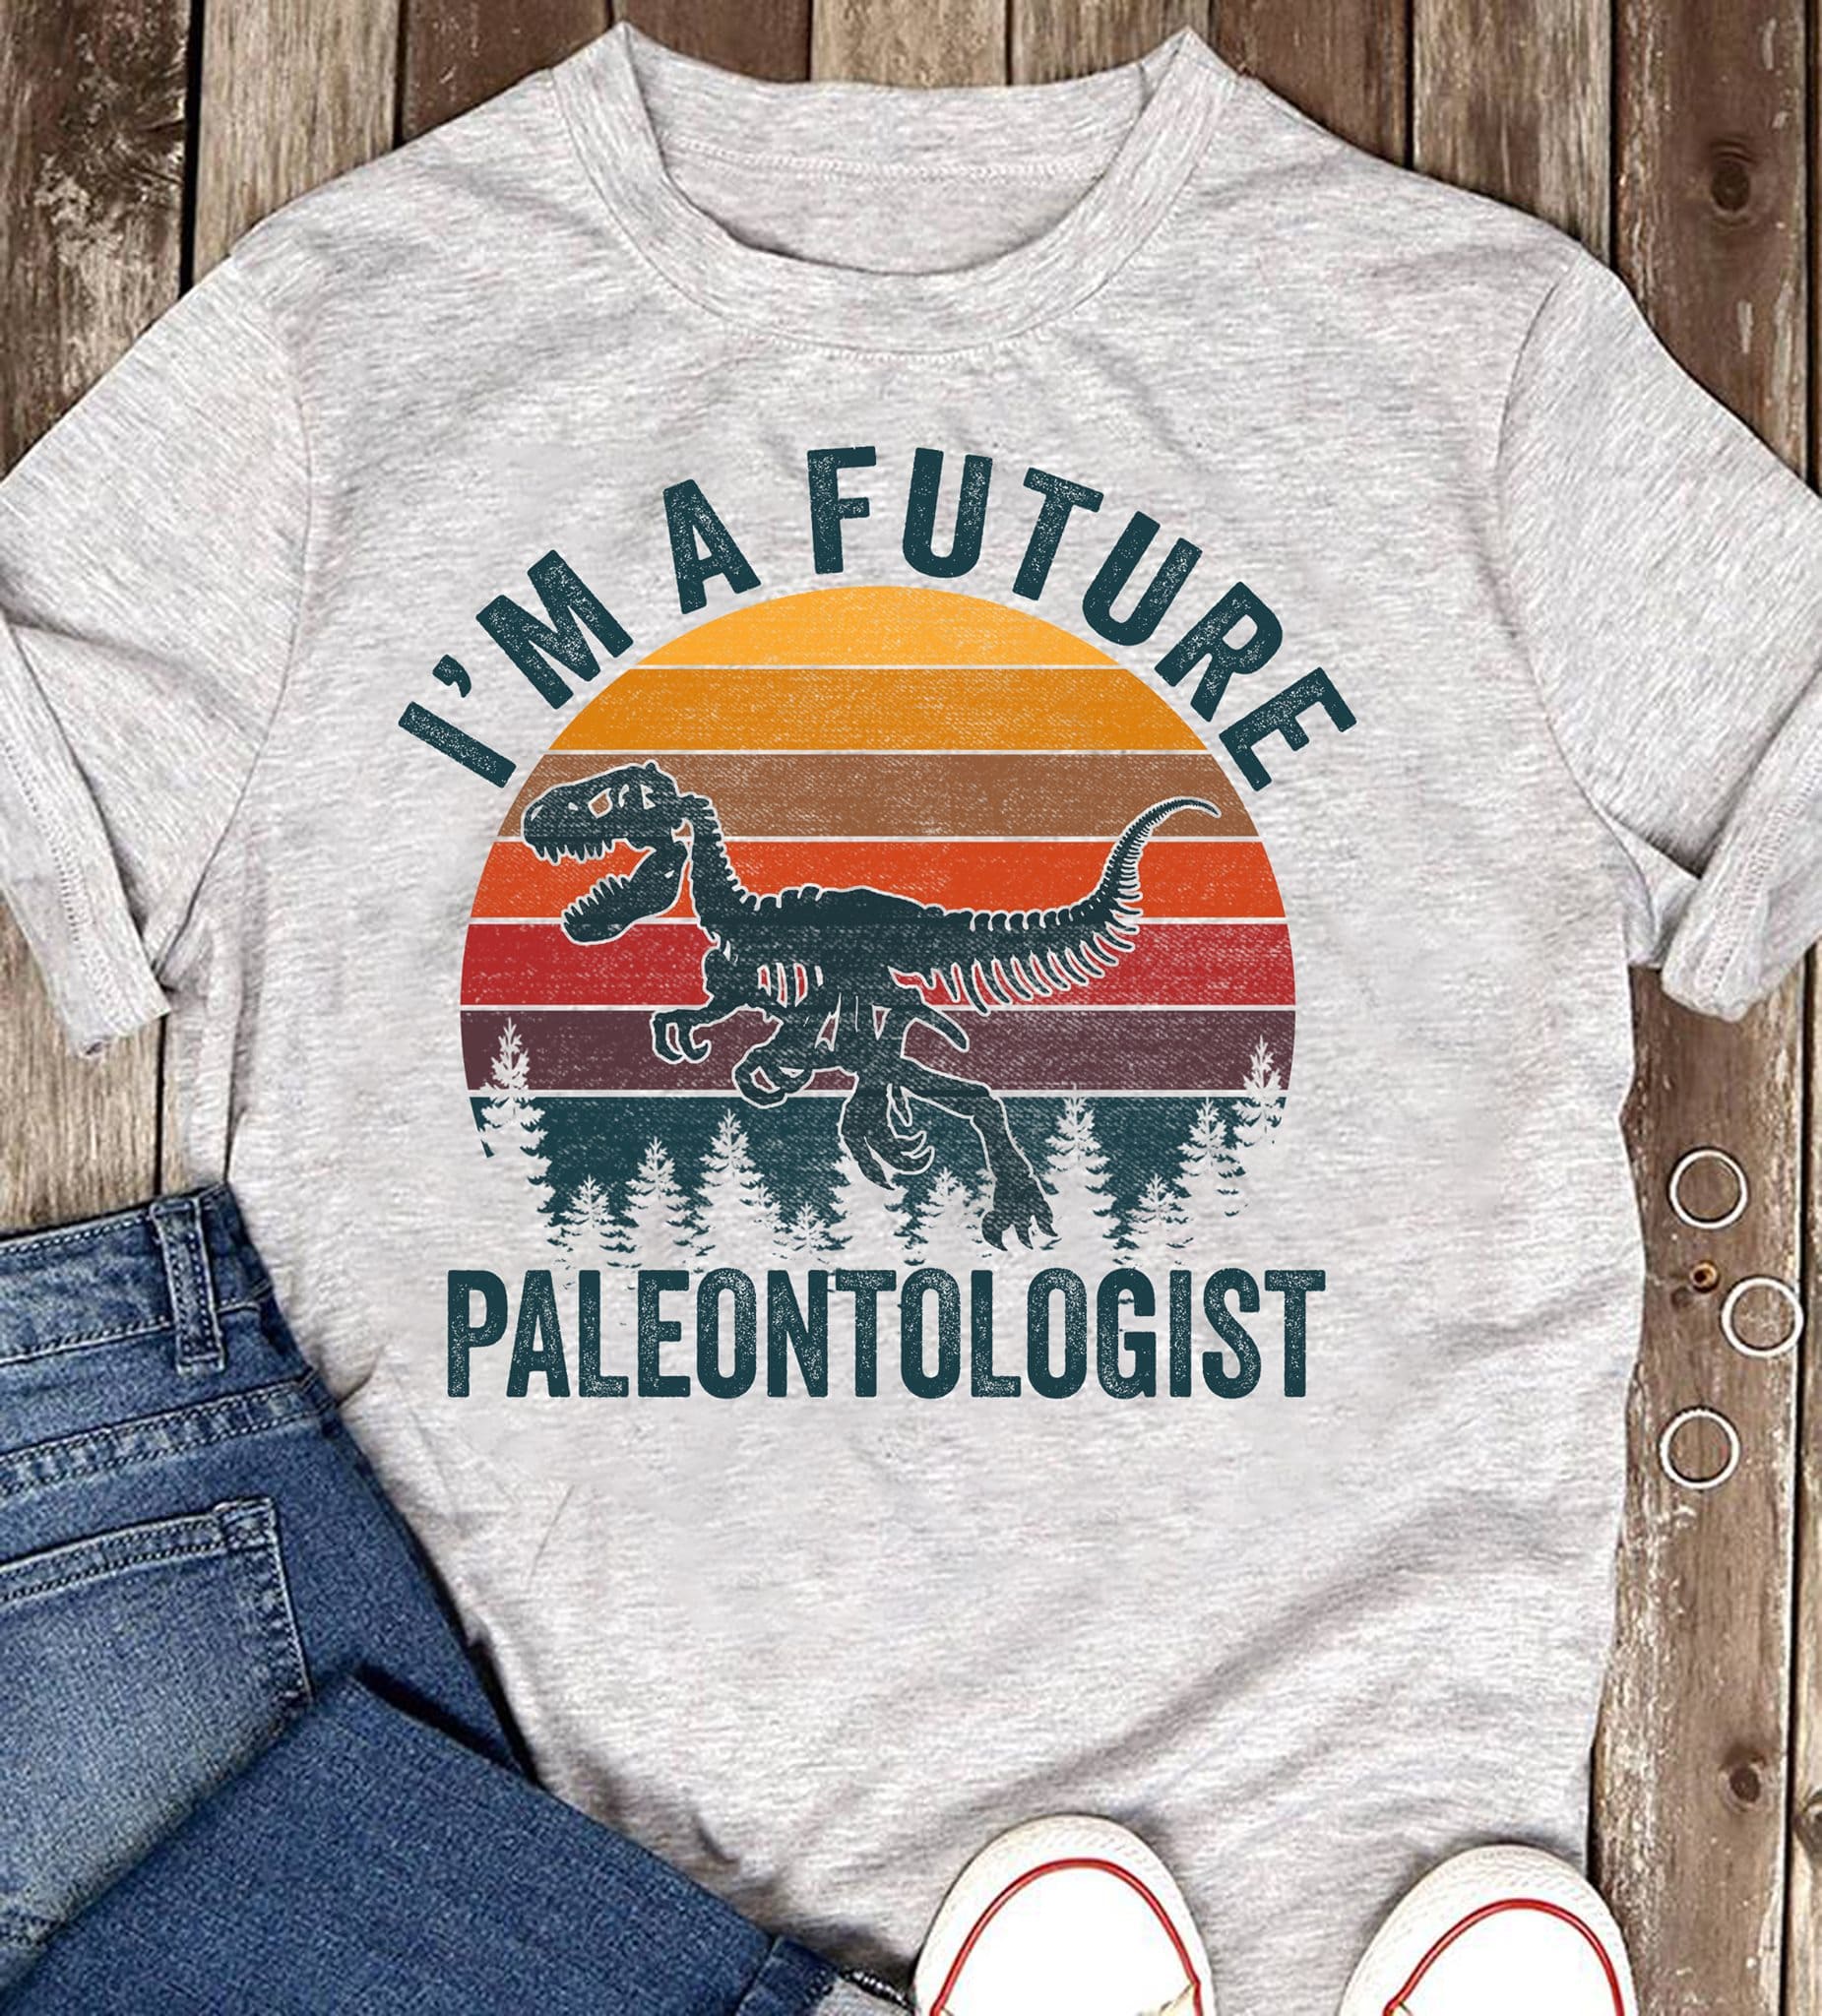 Dinosaur Skeleton - I'm a future paleontologist